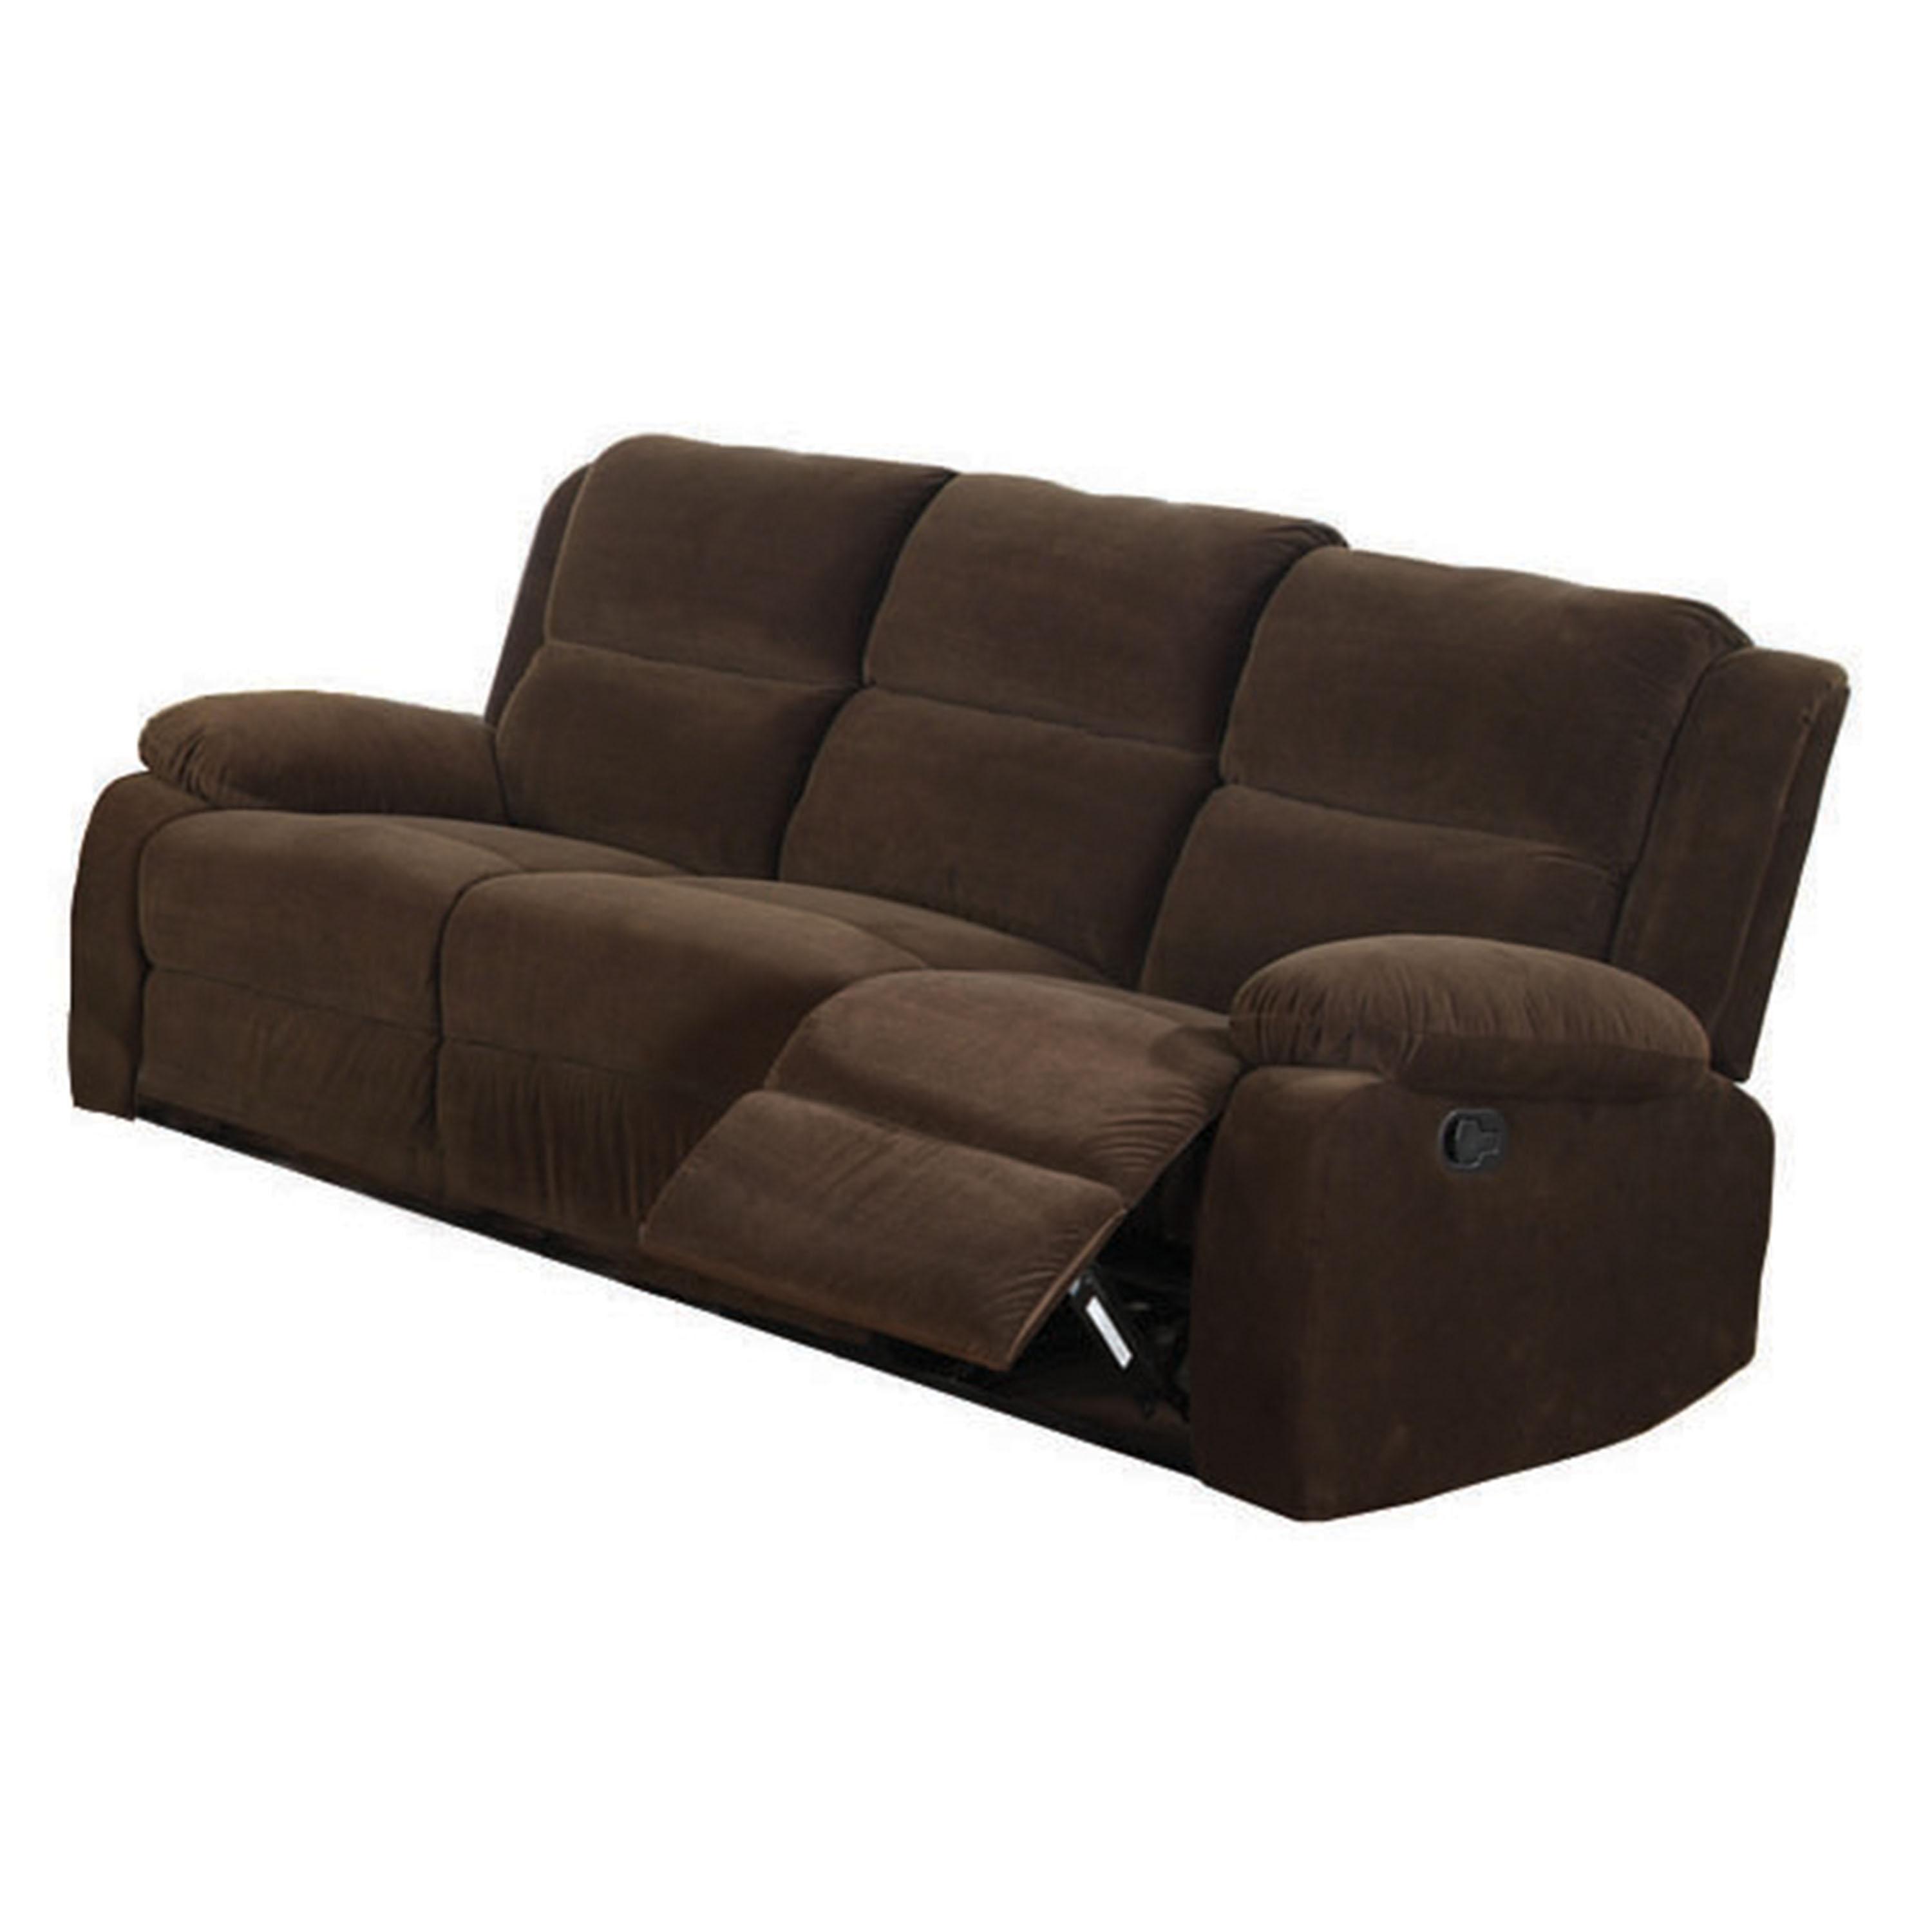 Furniture of America HAVEN CM6554-S Recliner Sofa